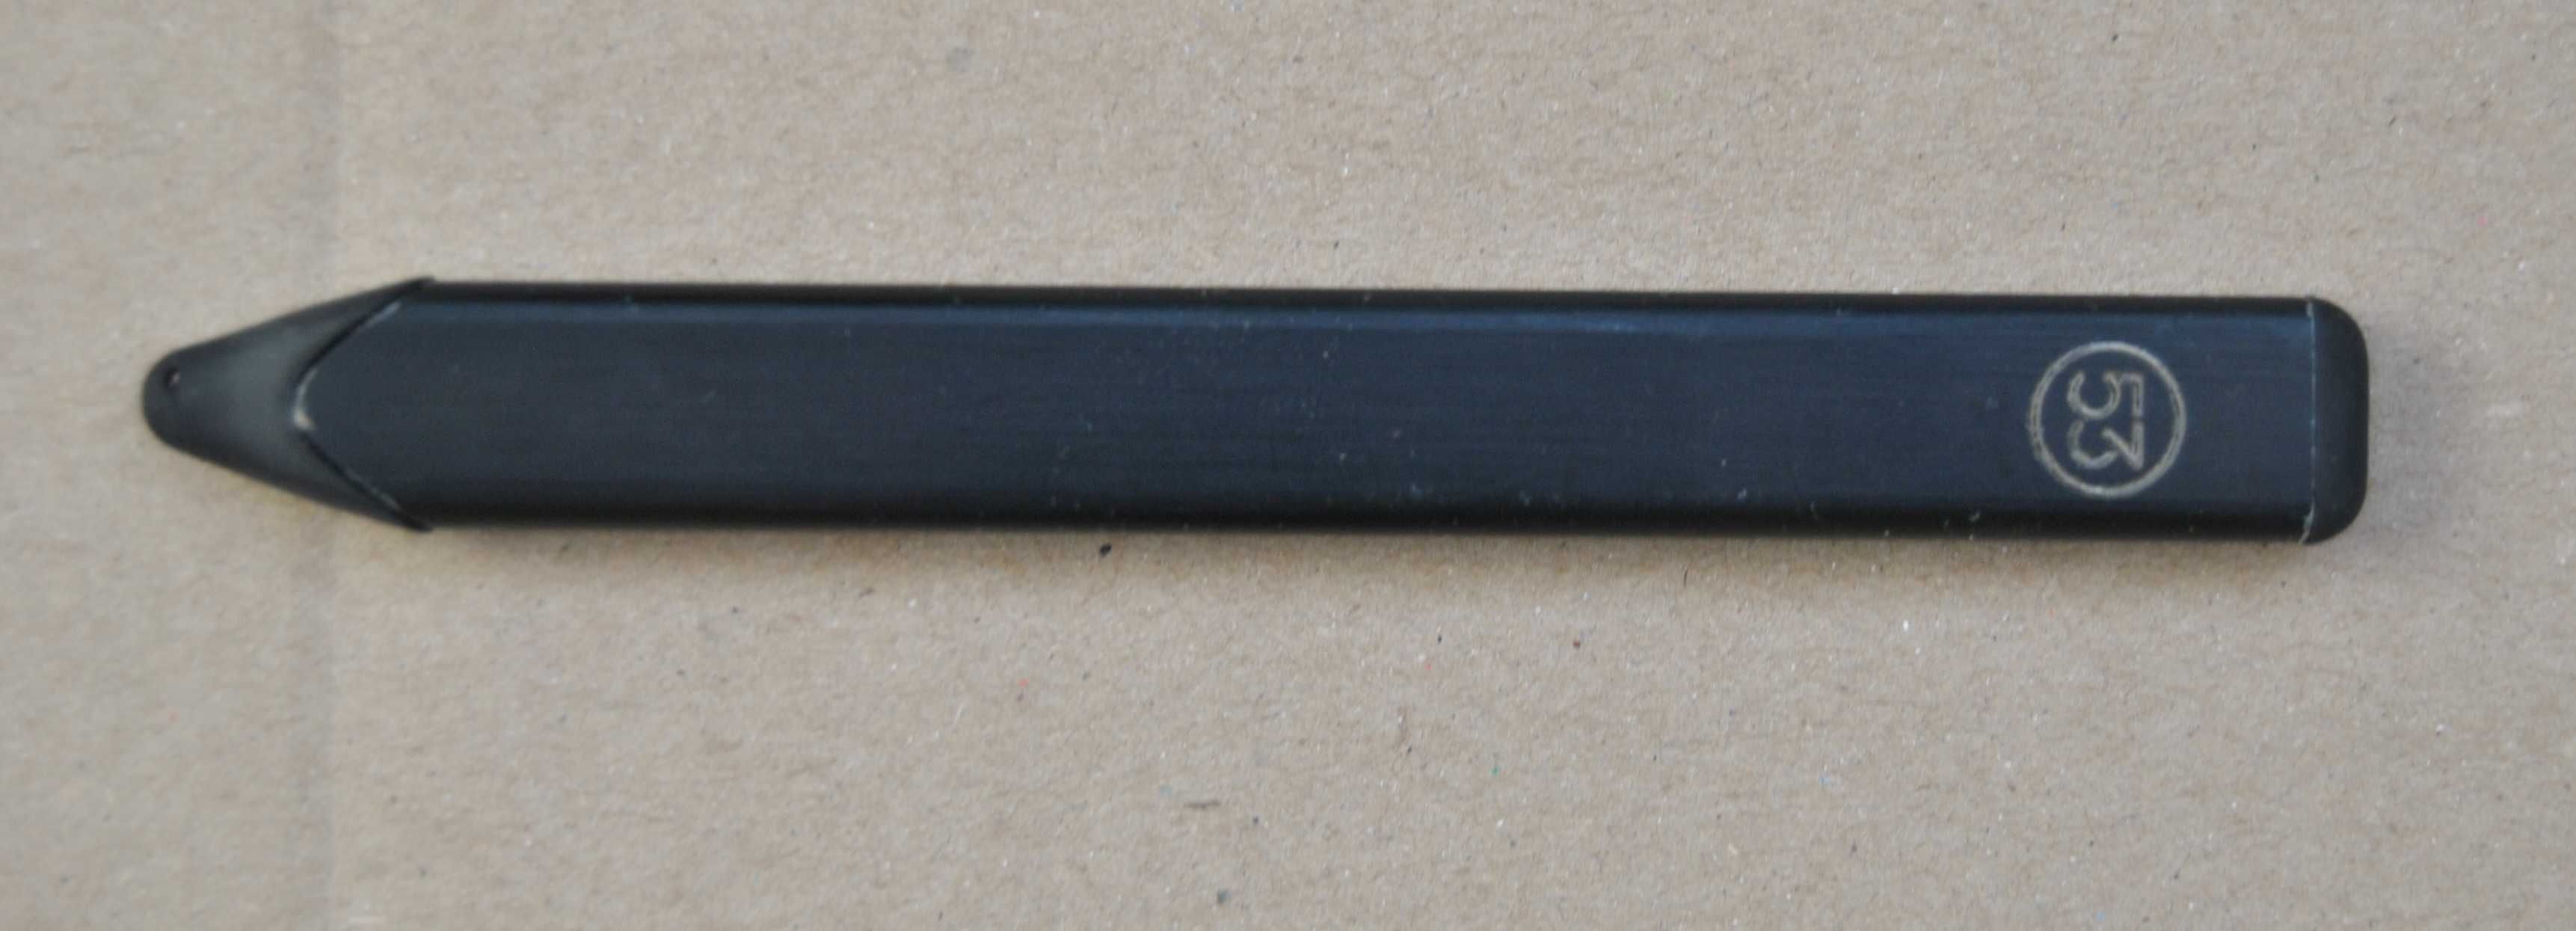 53 FiftyThree Pencil Graphite  Bluetooth Stylus